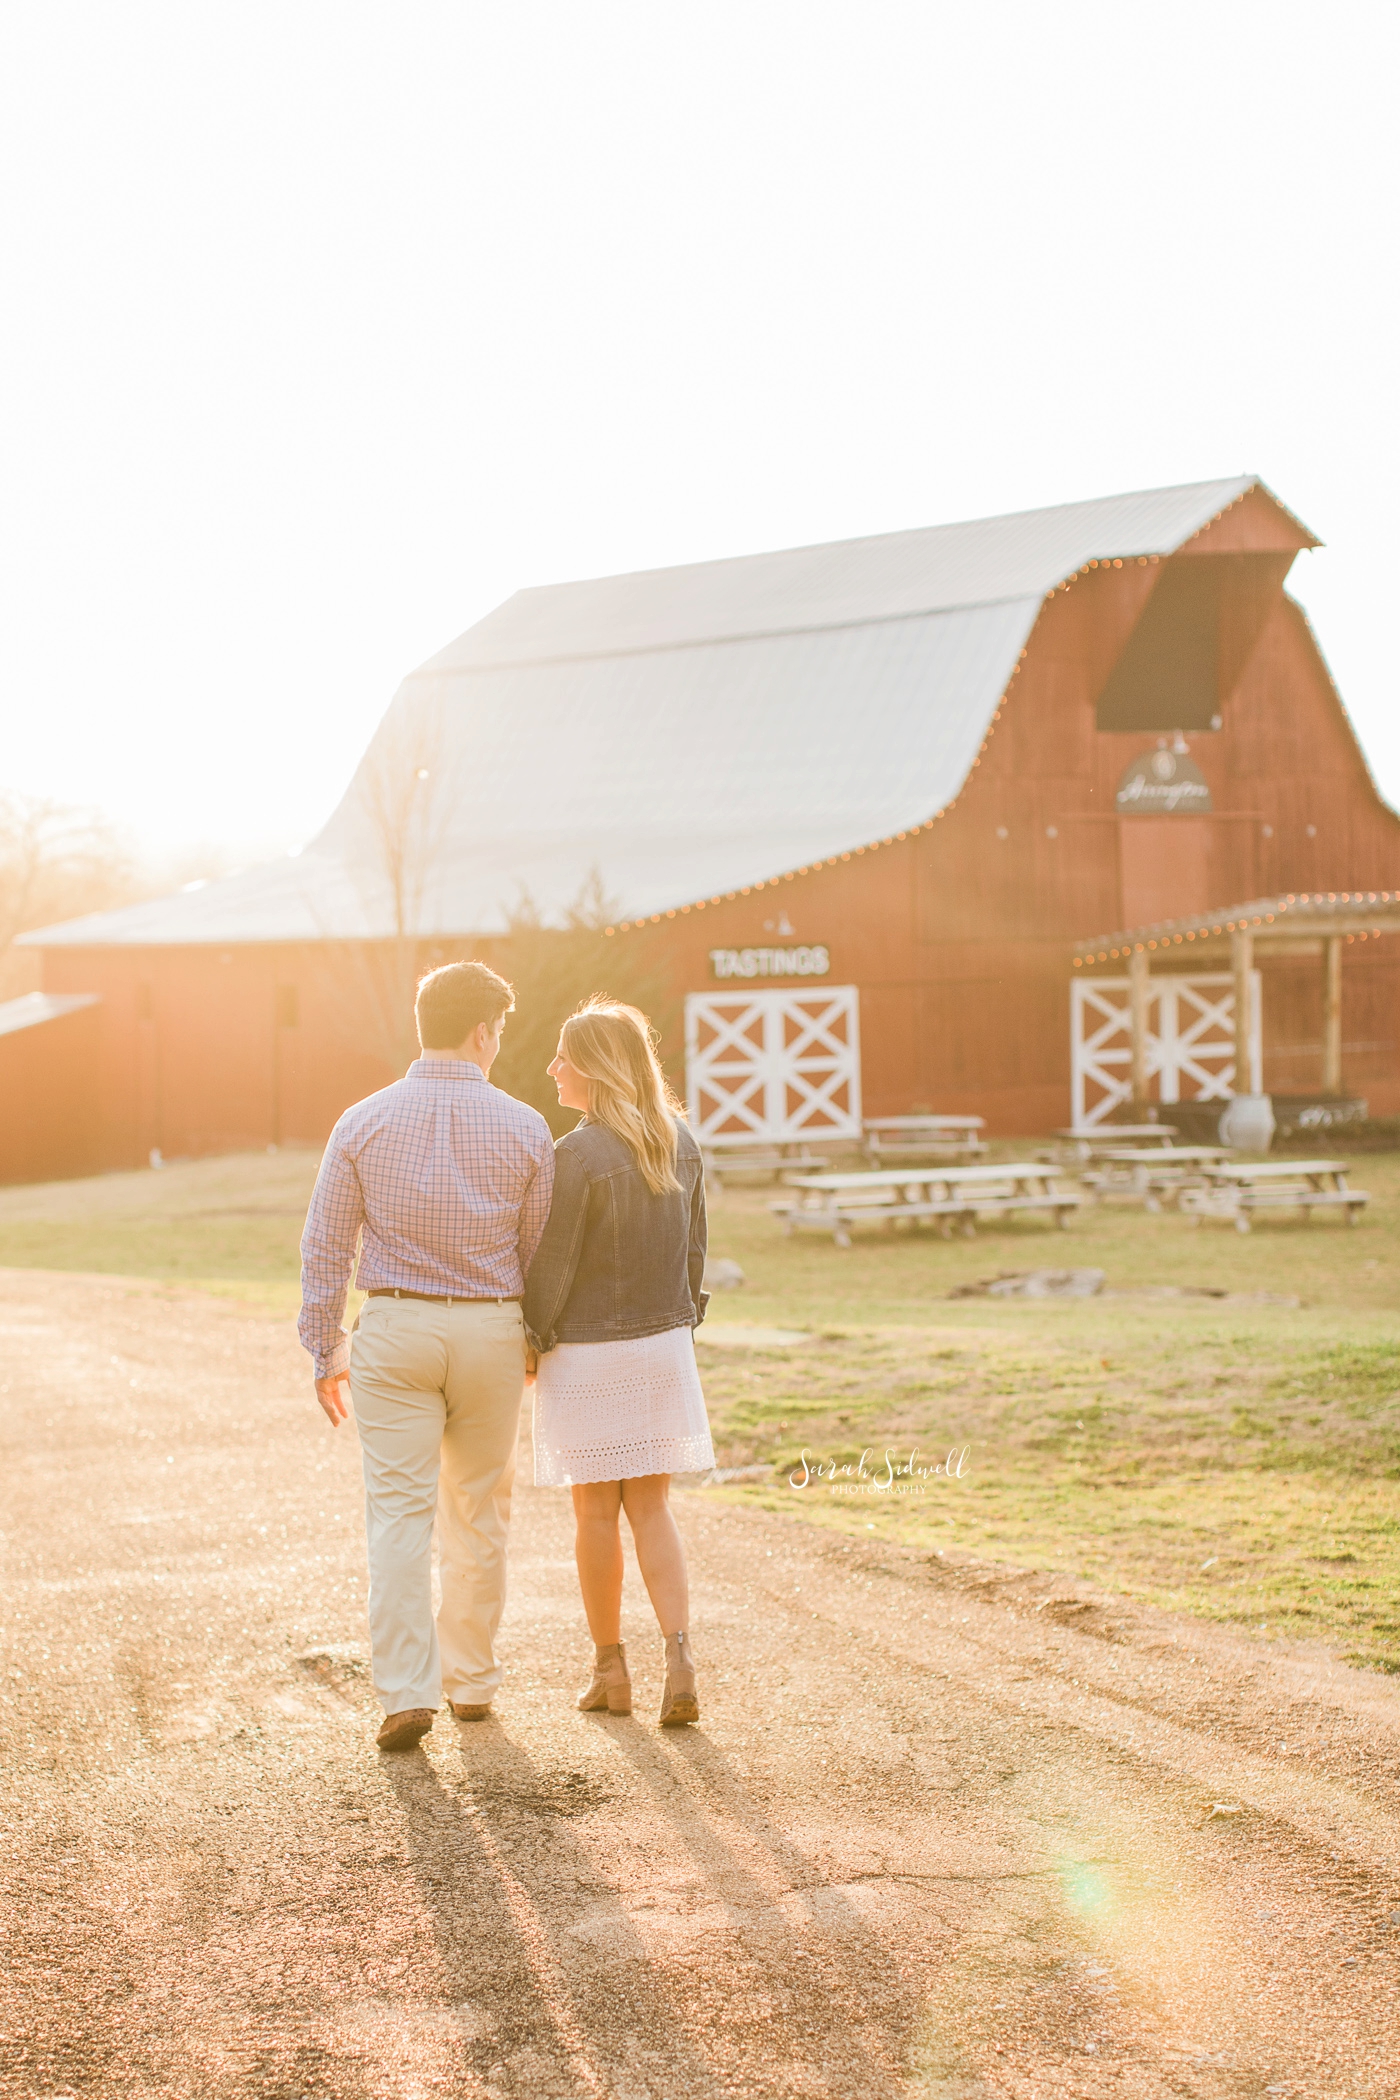 A couple walk in the sunlight towards a barn. 